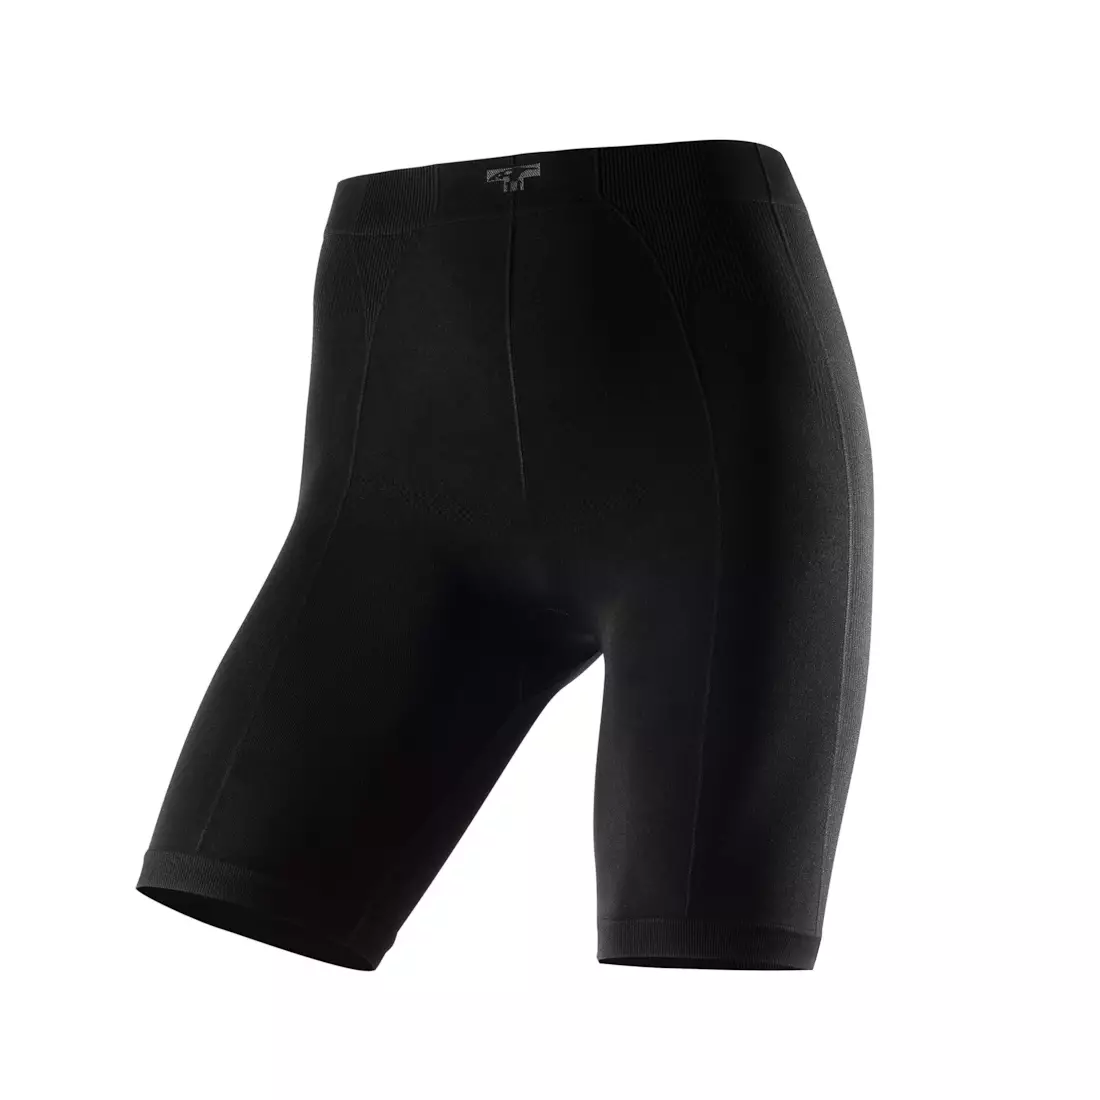 TERVEL - COMFORTLINE - women's shorts, black